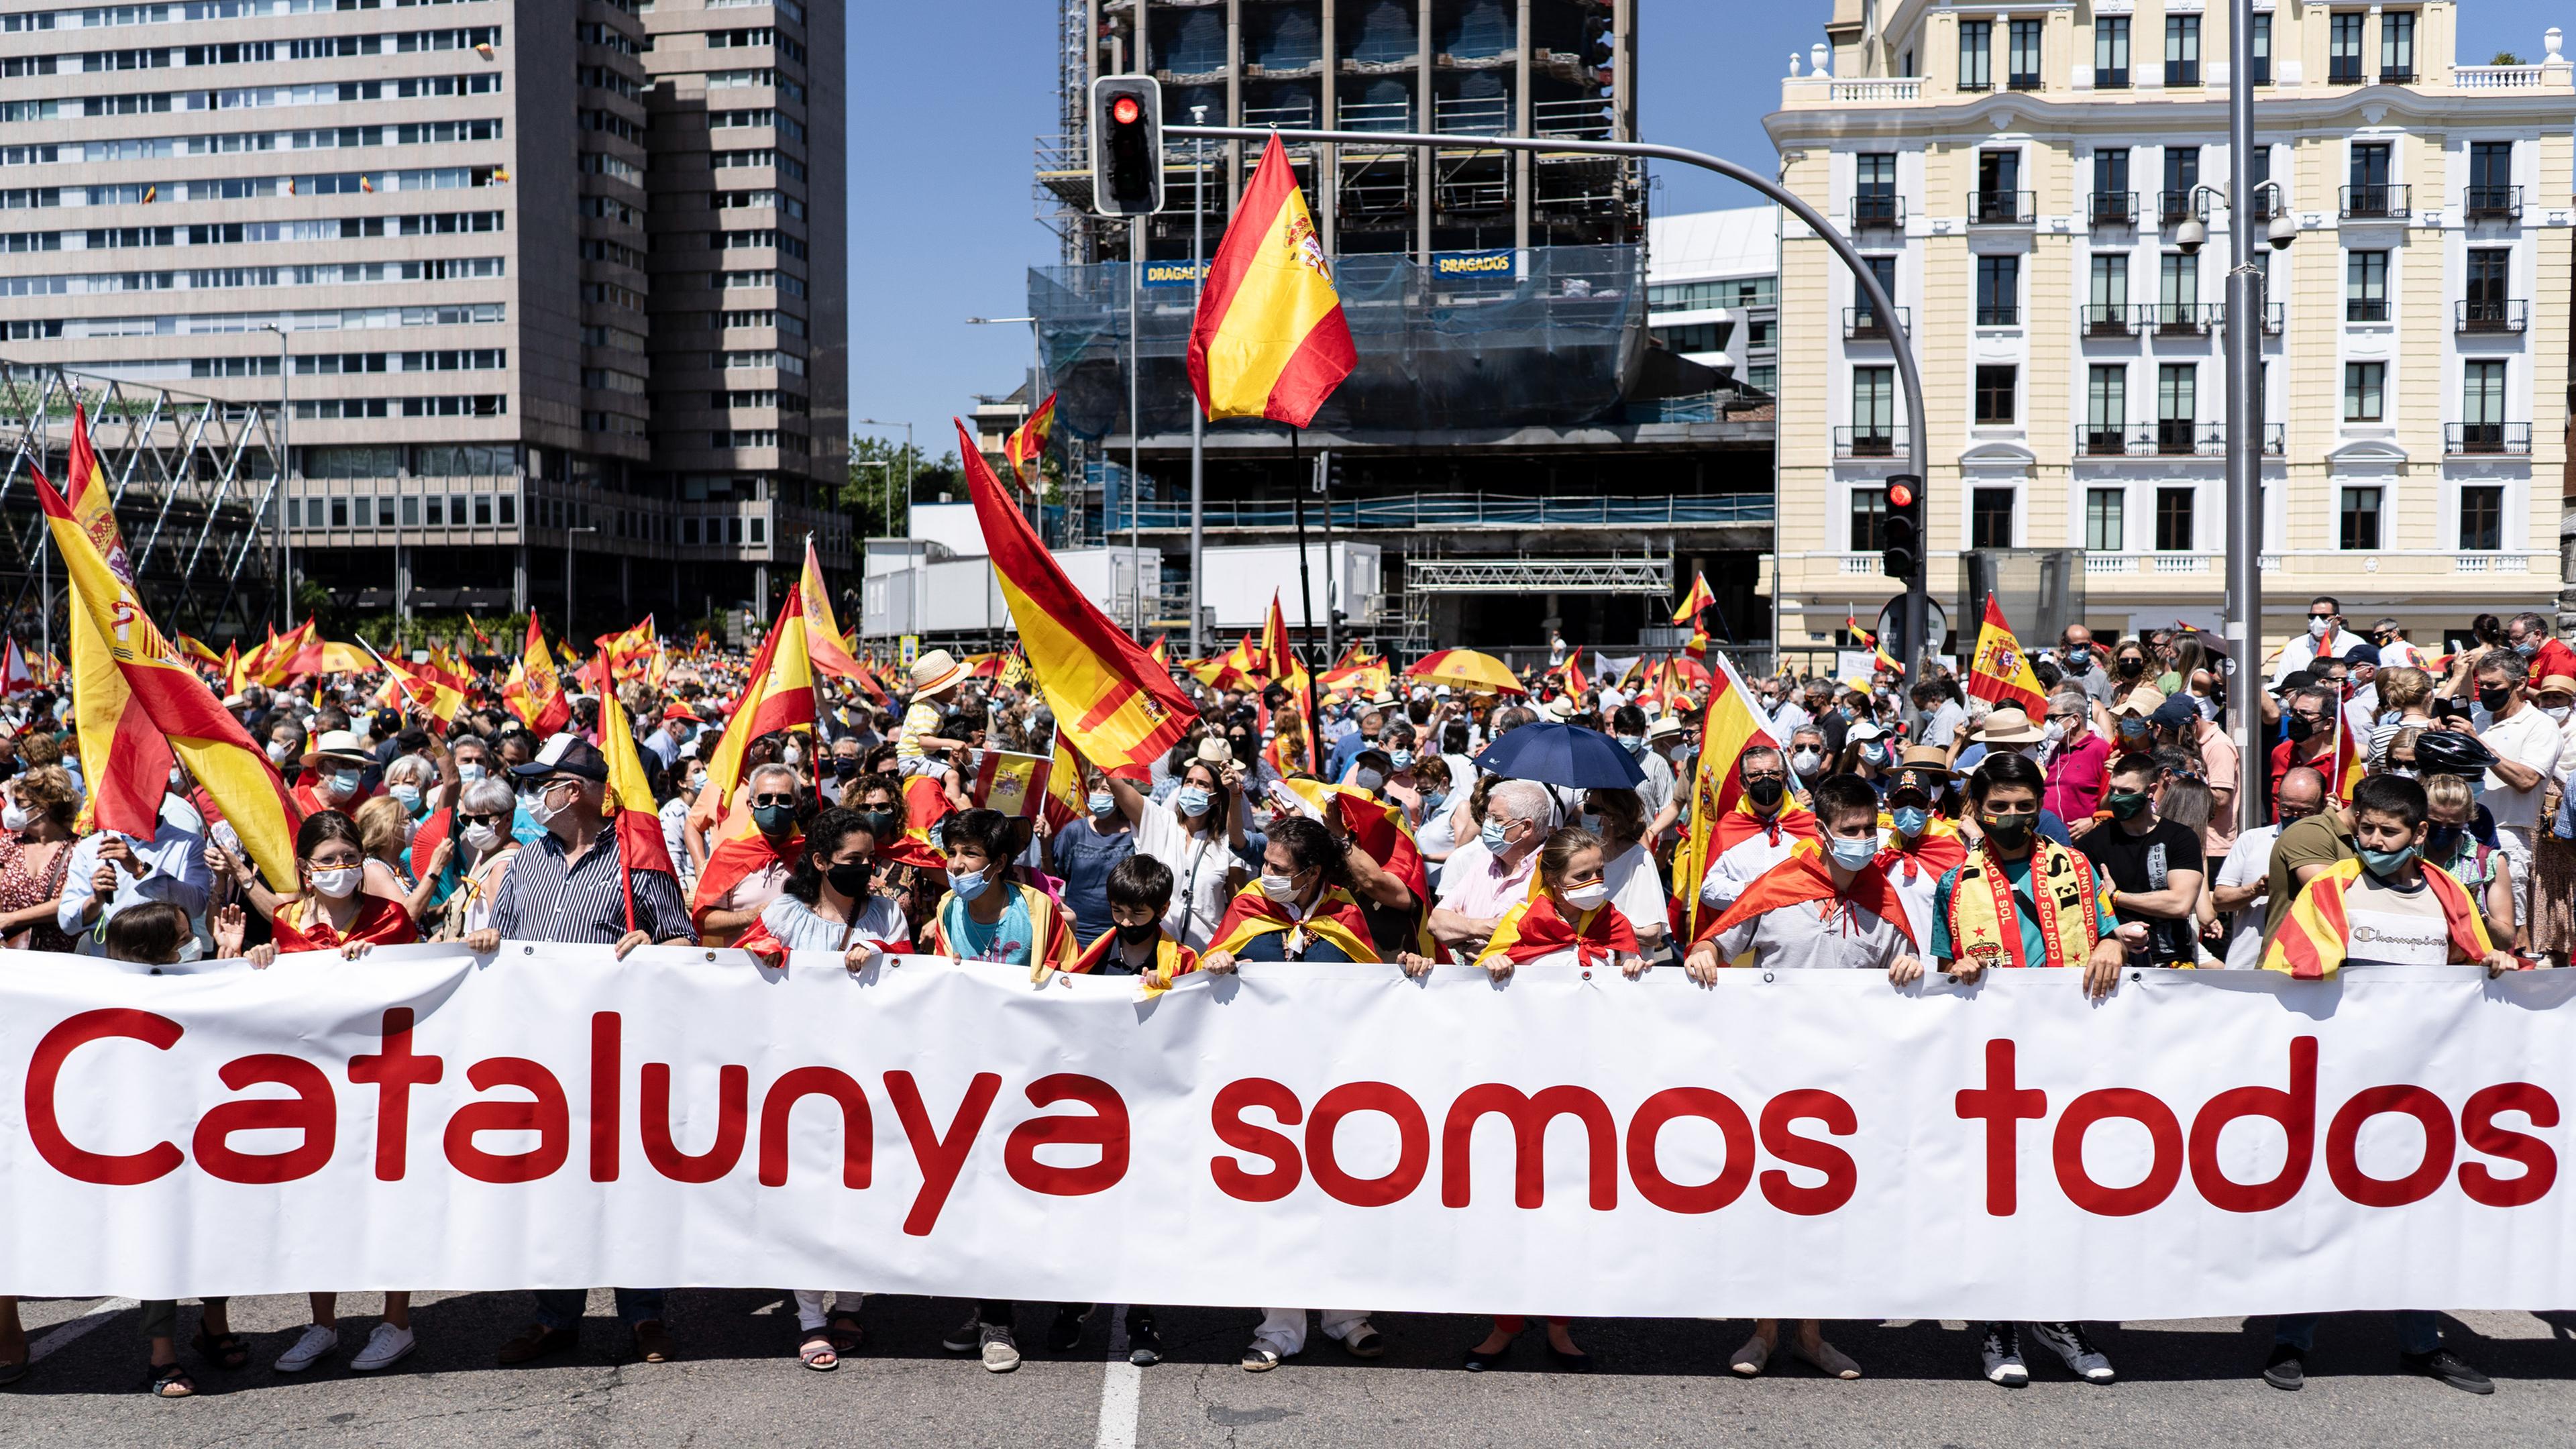 Demonstration mit Banner "Catalunya somos todos"